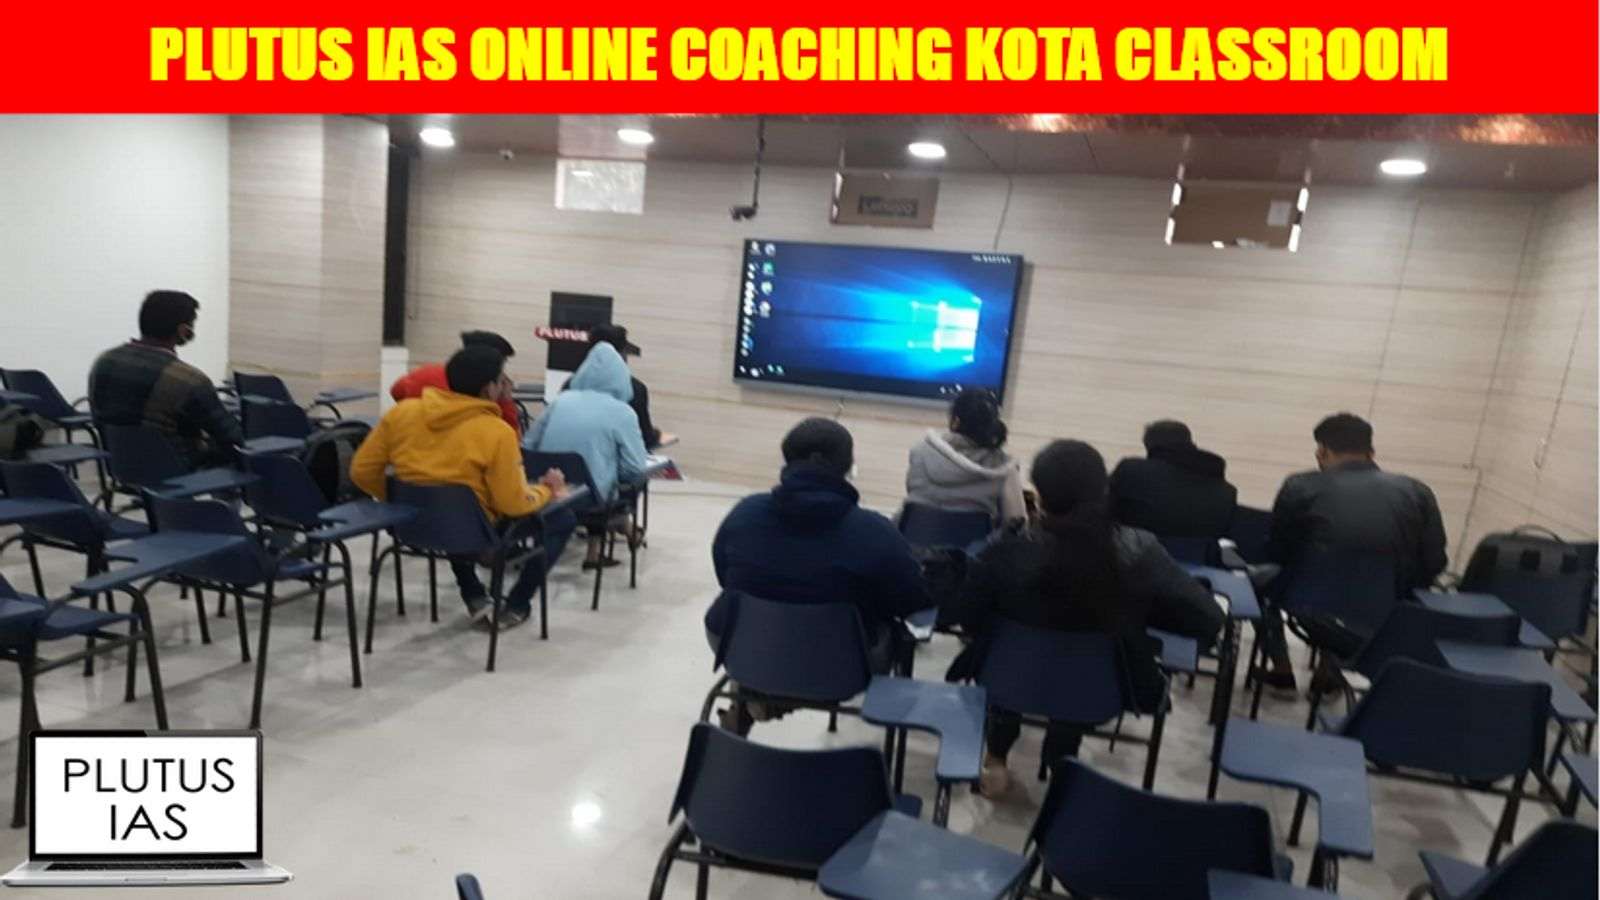 Plutus IAS Online Coaching Kota Class Room